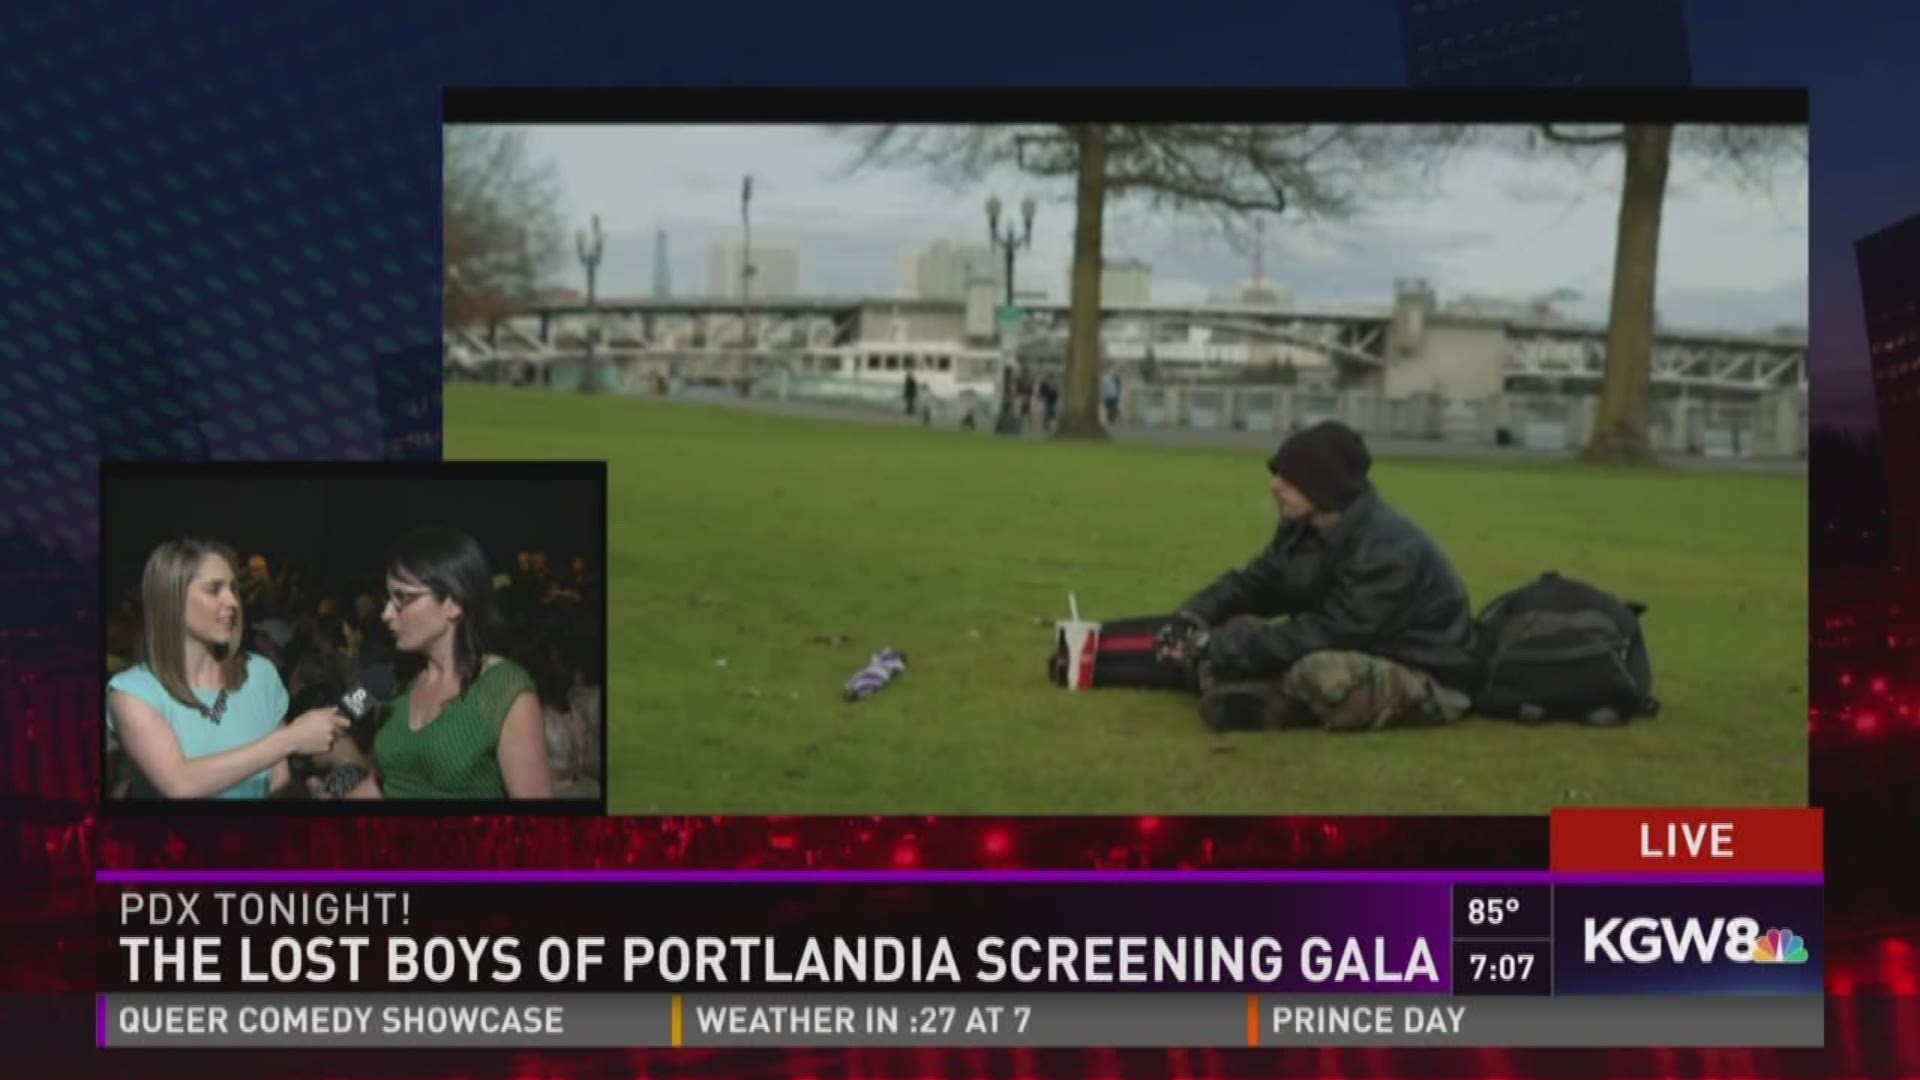 The Lost Boys of Portlandia screening Gala